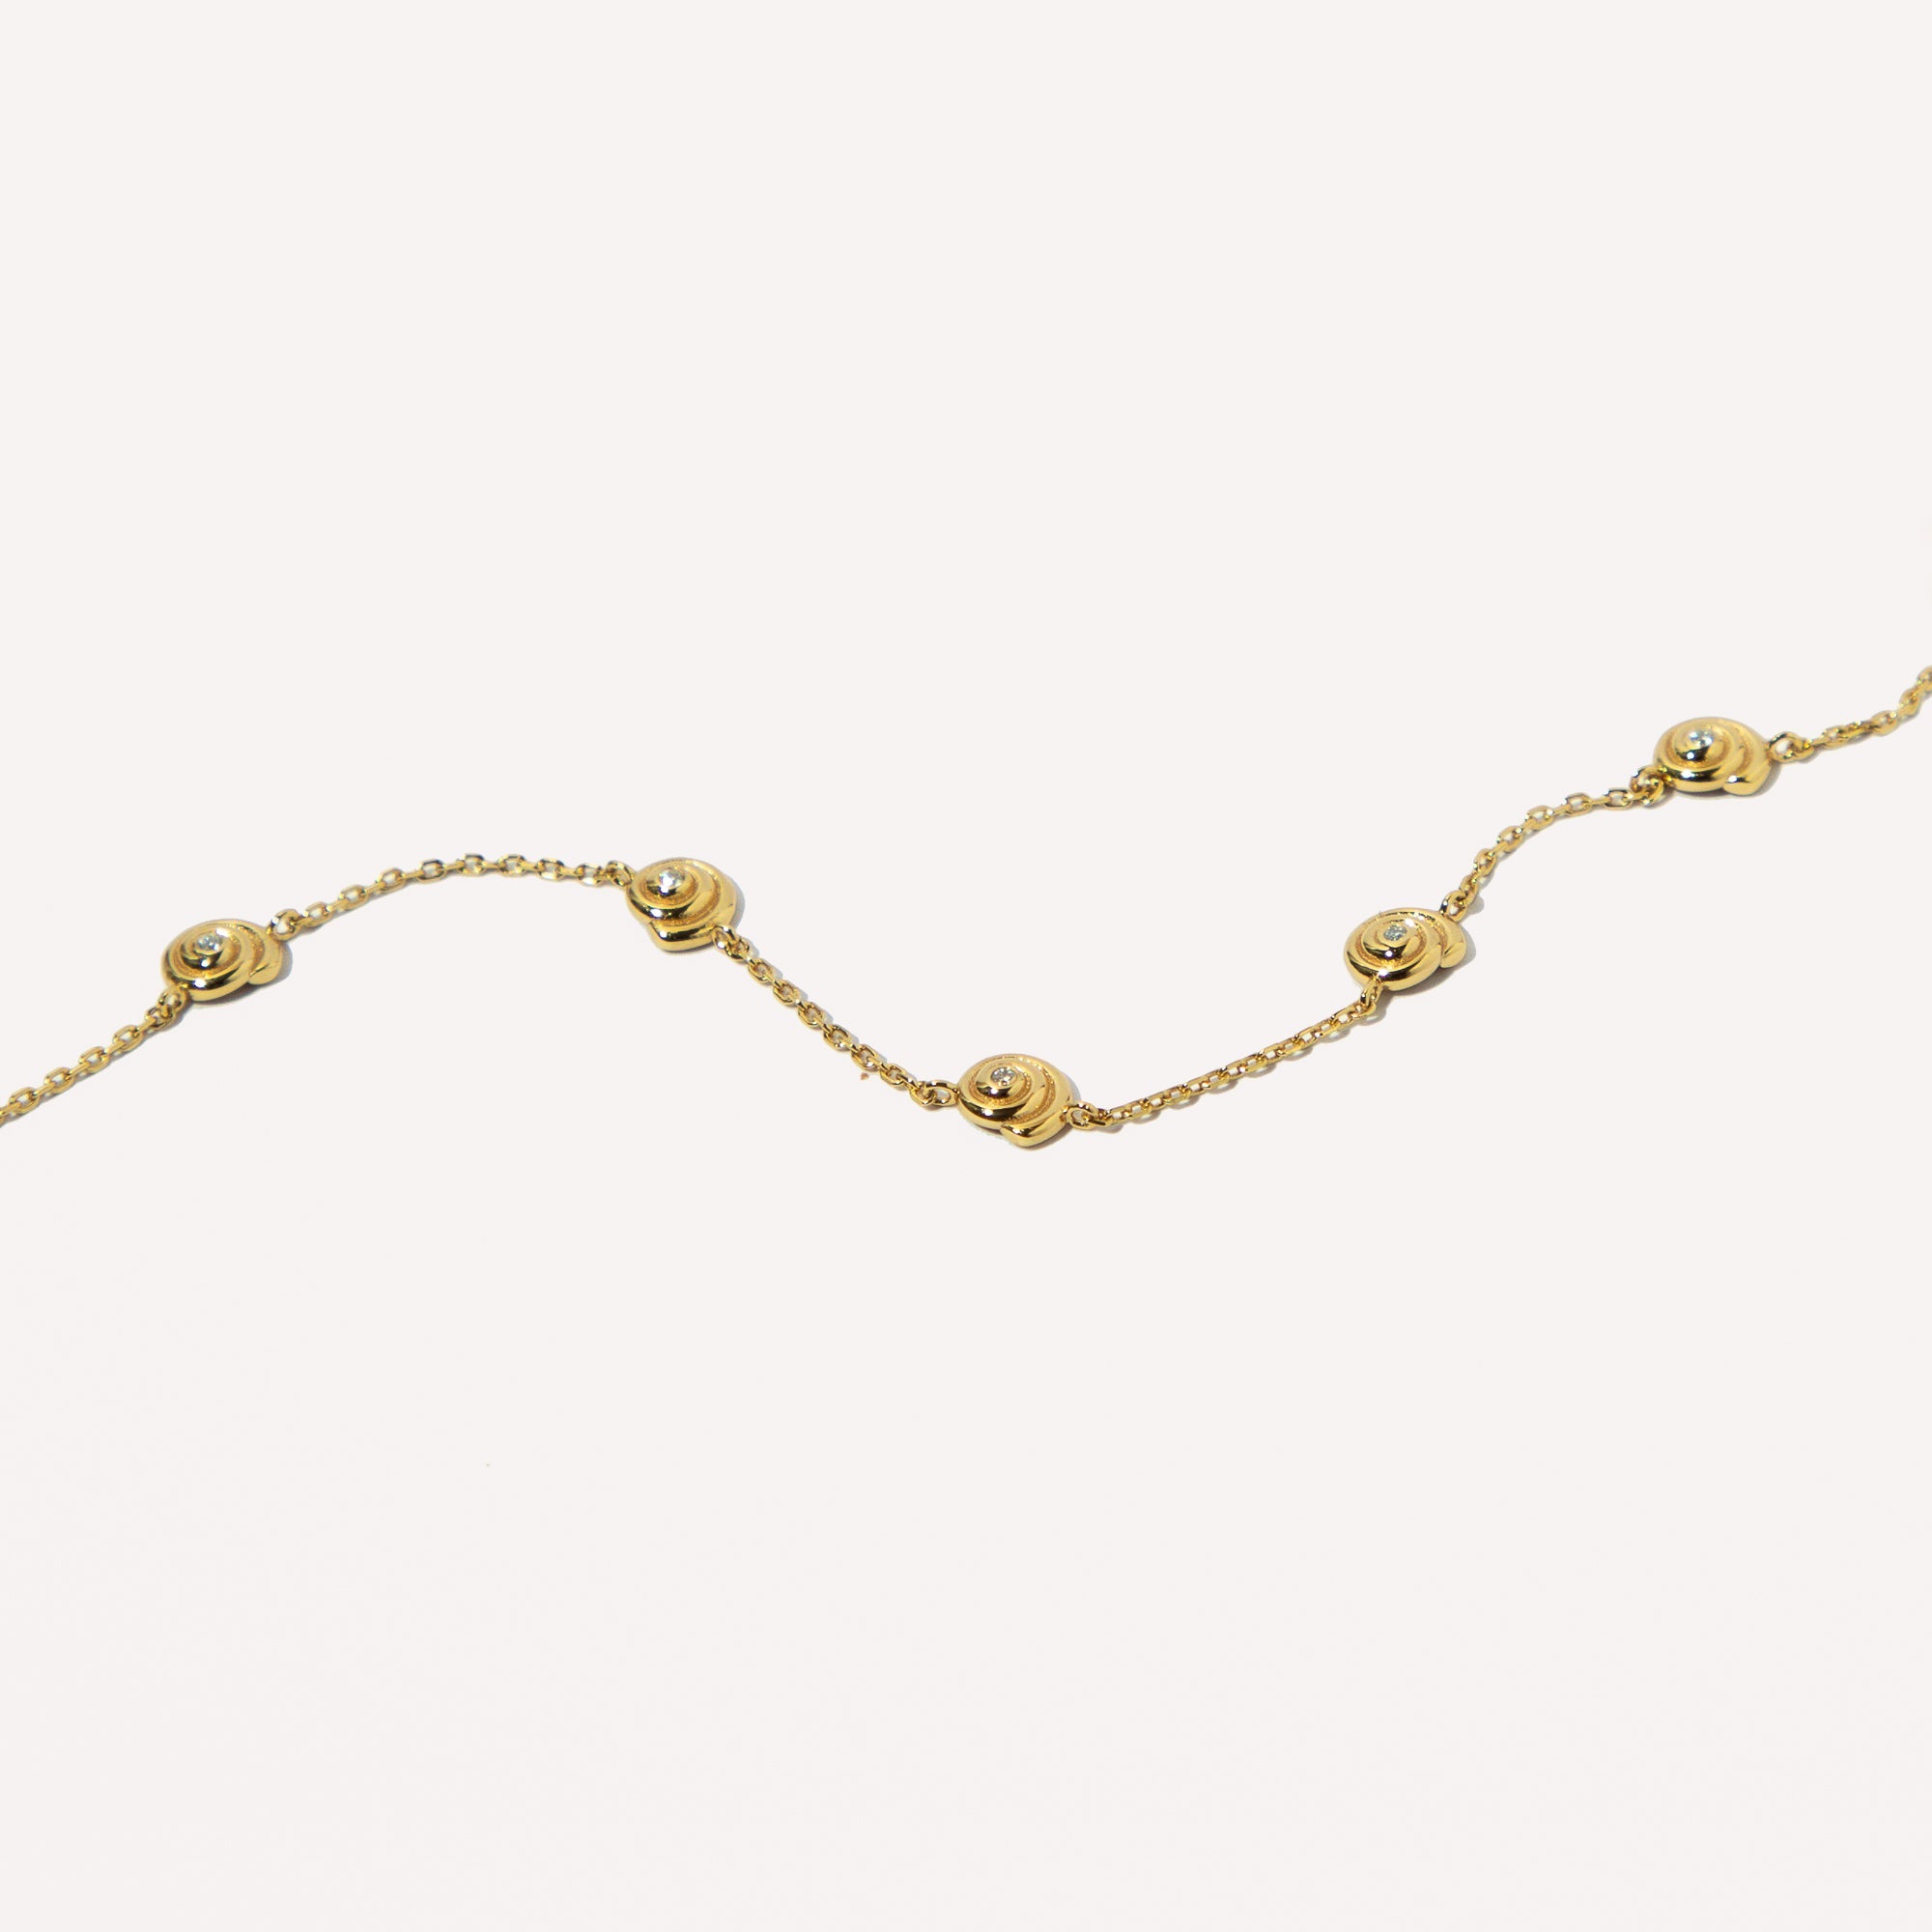 Shell Crystal Charm Bracelet in Gold